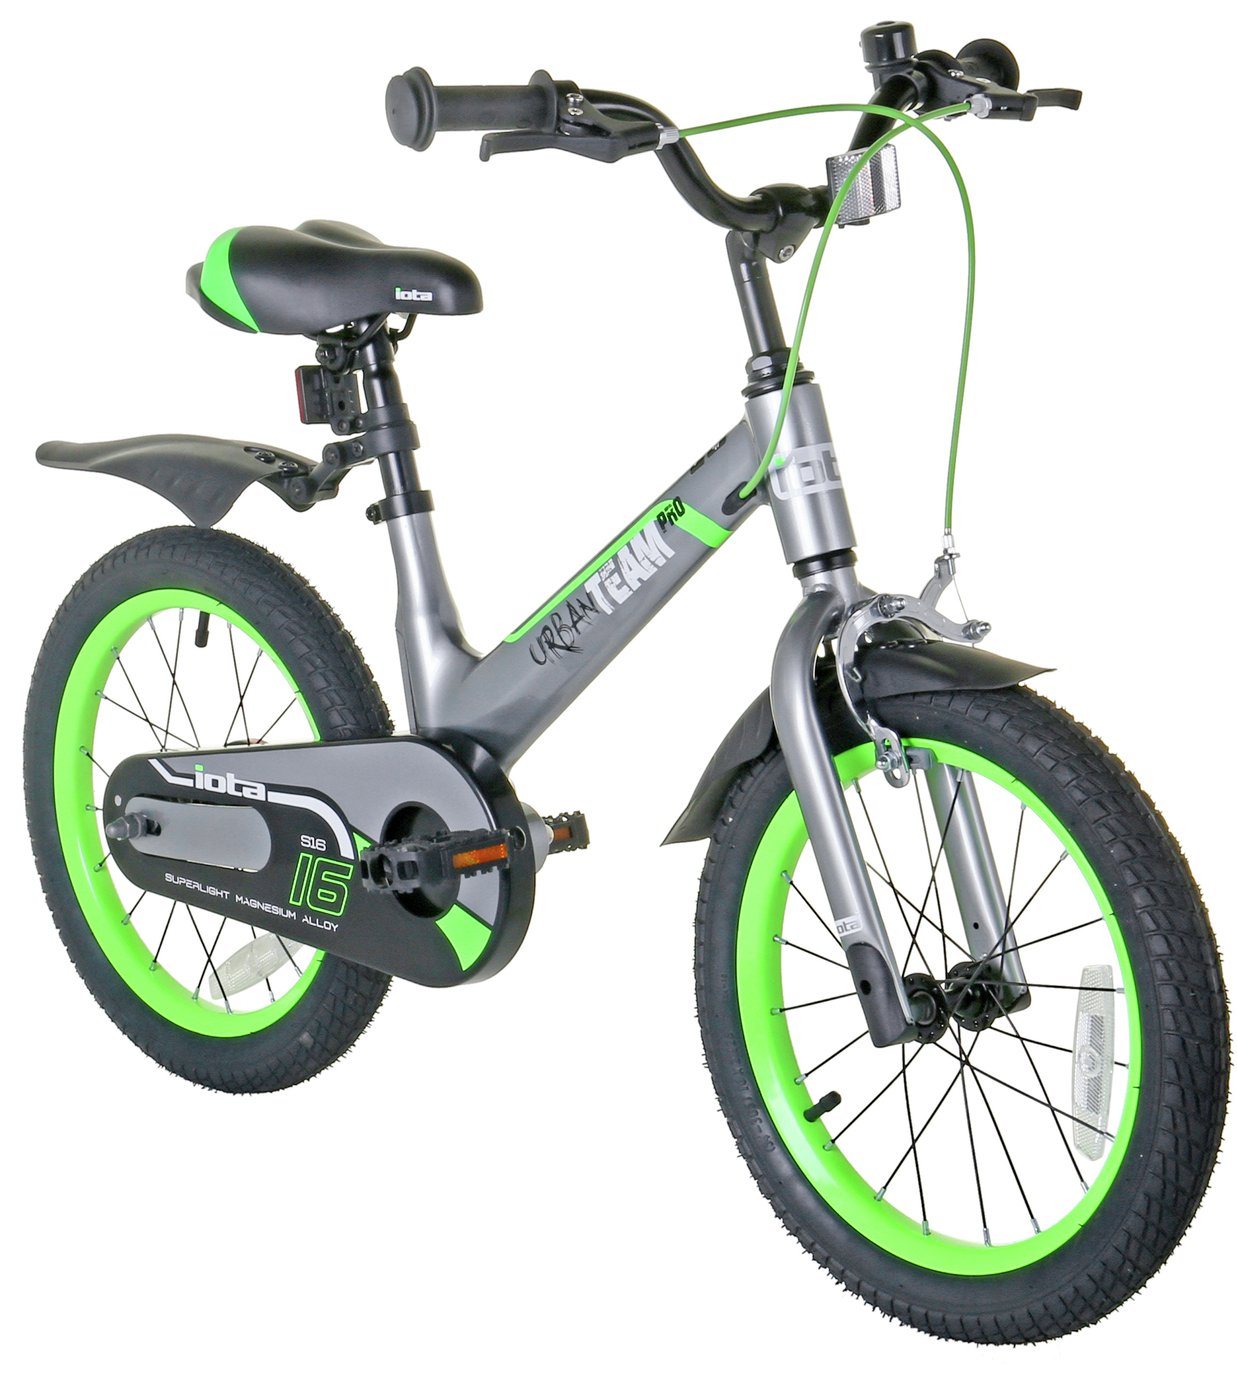 Iota Urban Team 16 inch Wheel Size Alloy Kid's Bike